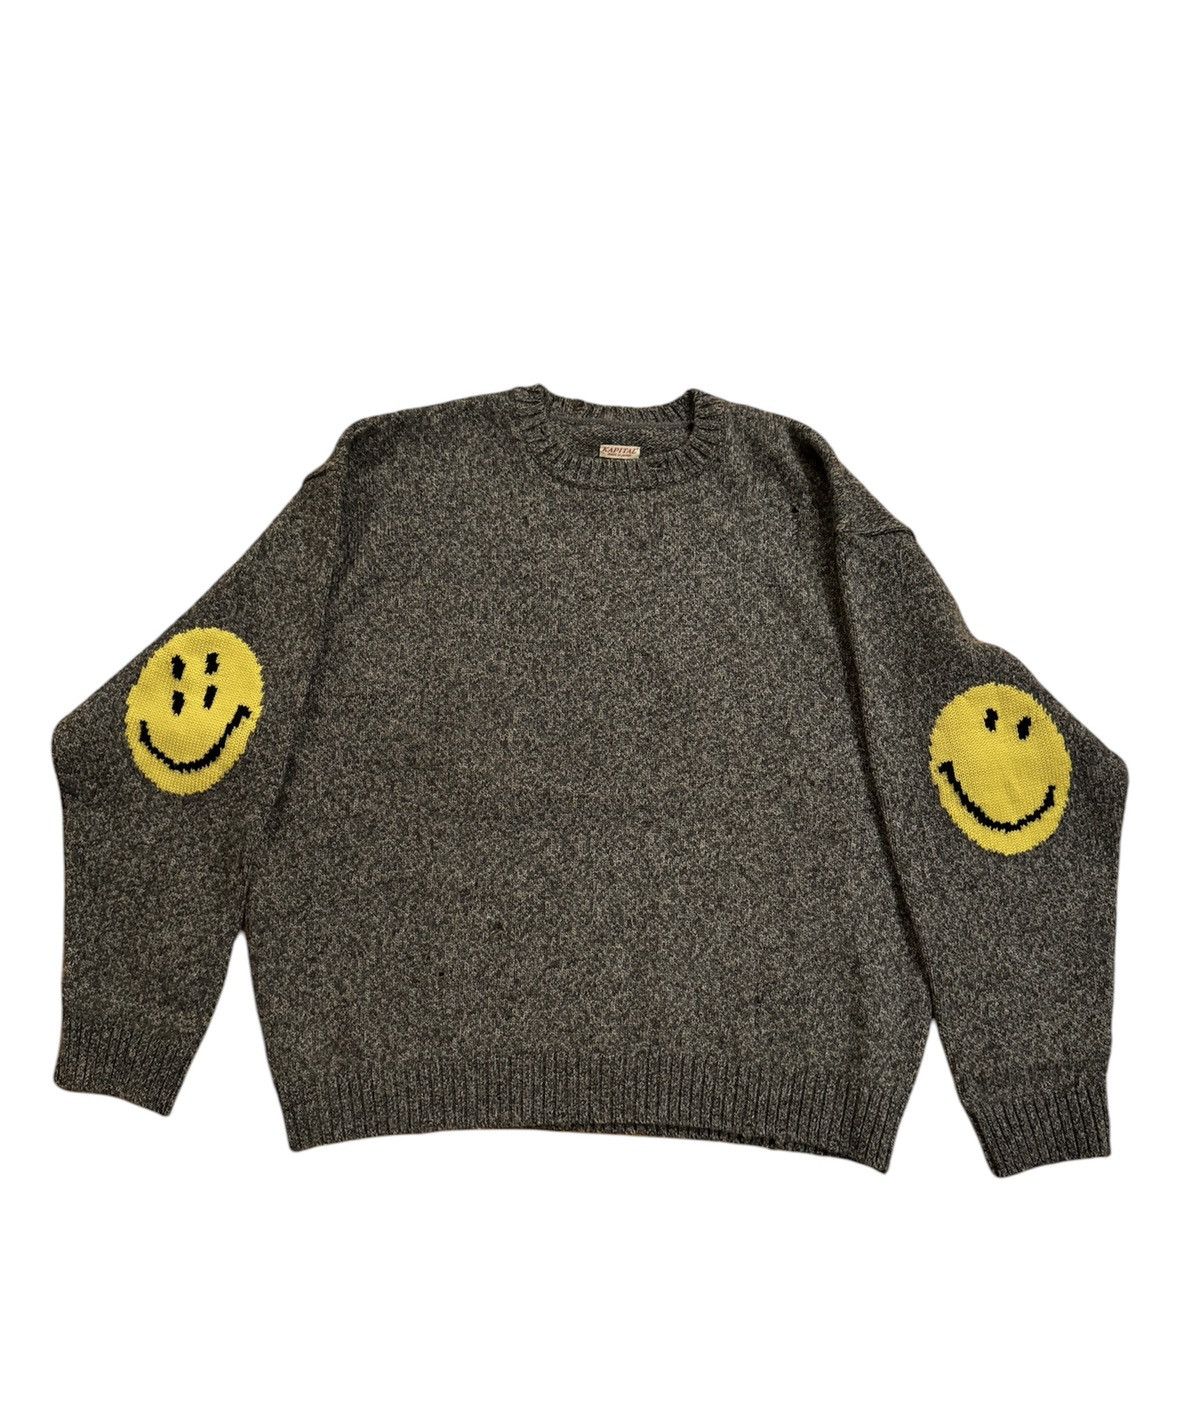 Kapital Smiley Sweater | Grailed